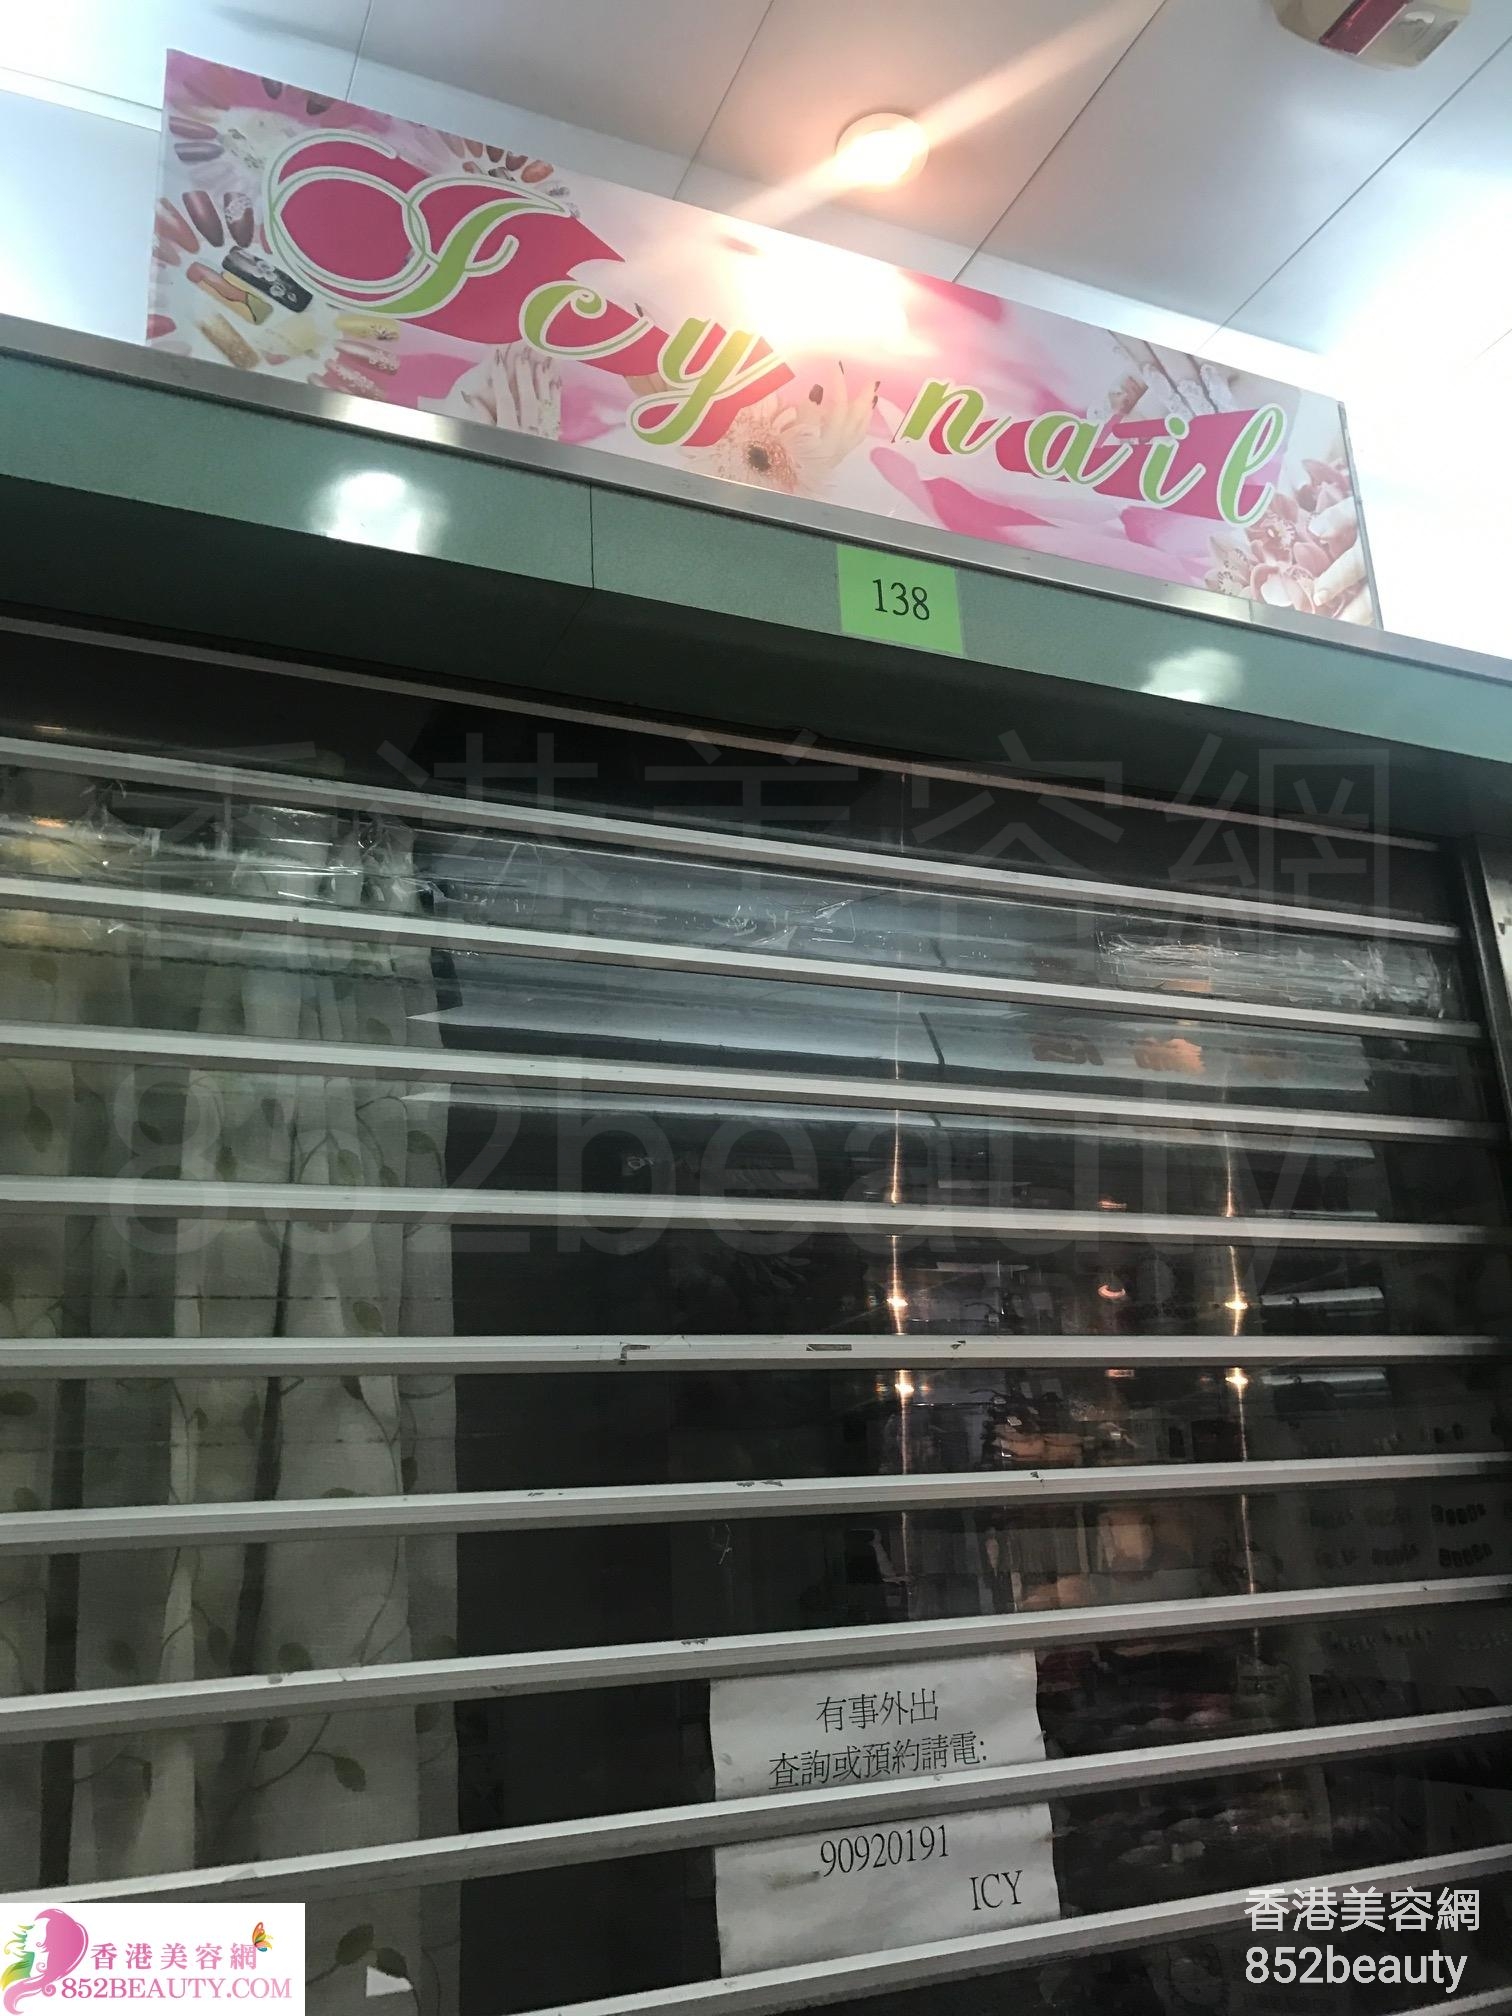 香港美容網 Hong Kong Beauty Salon 美容院 / 美容師: Icy Nail